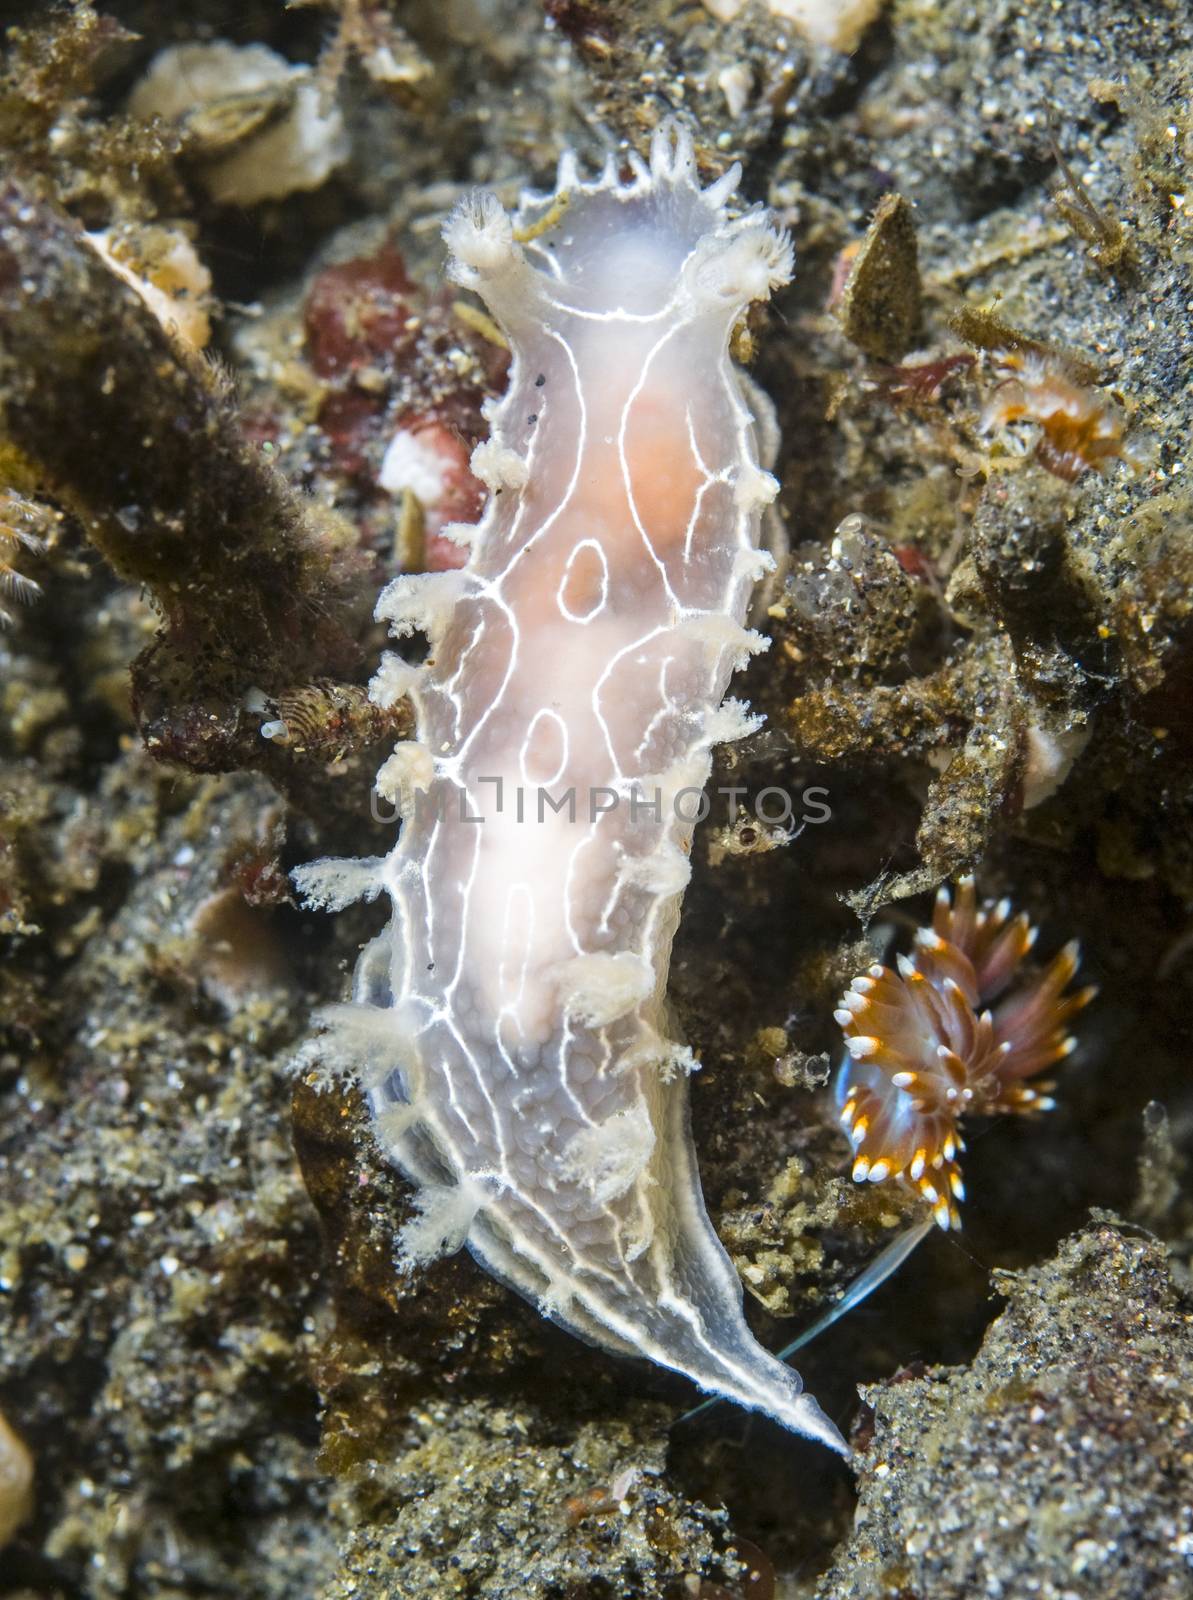 Tritonia festiva nudibranch off Anacapa Island, CA by Njean